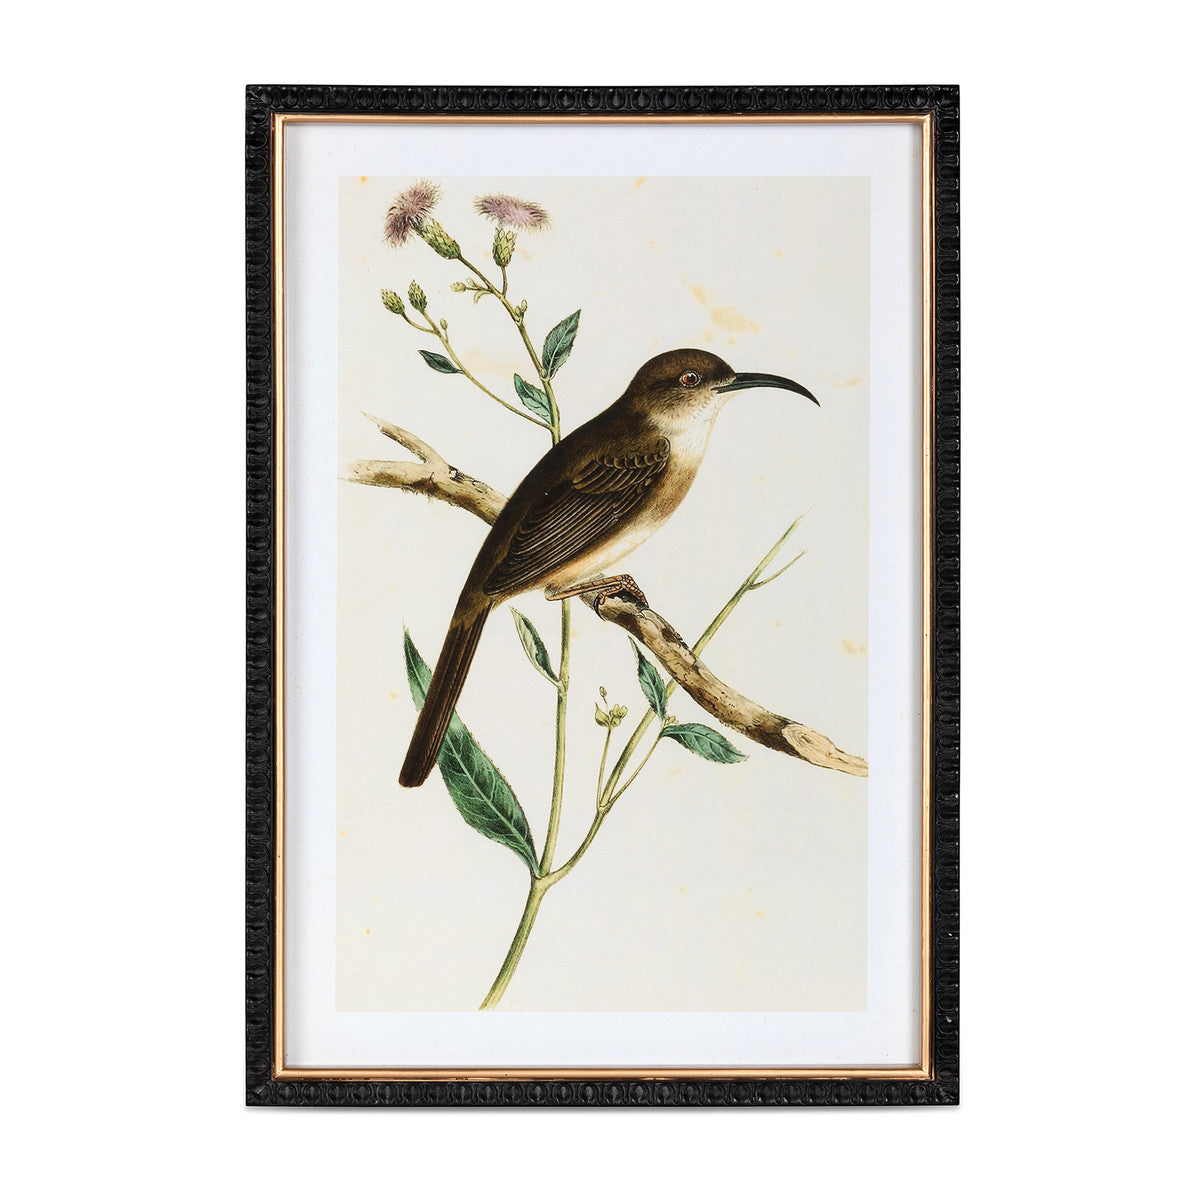 Summer Bird Framed Prints - 4 Assorted Styles